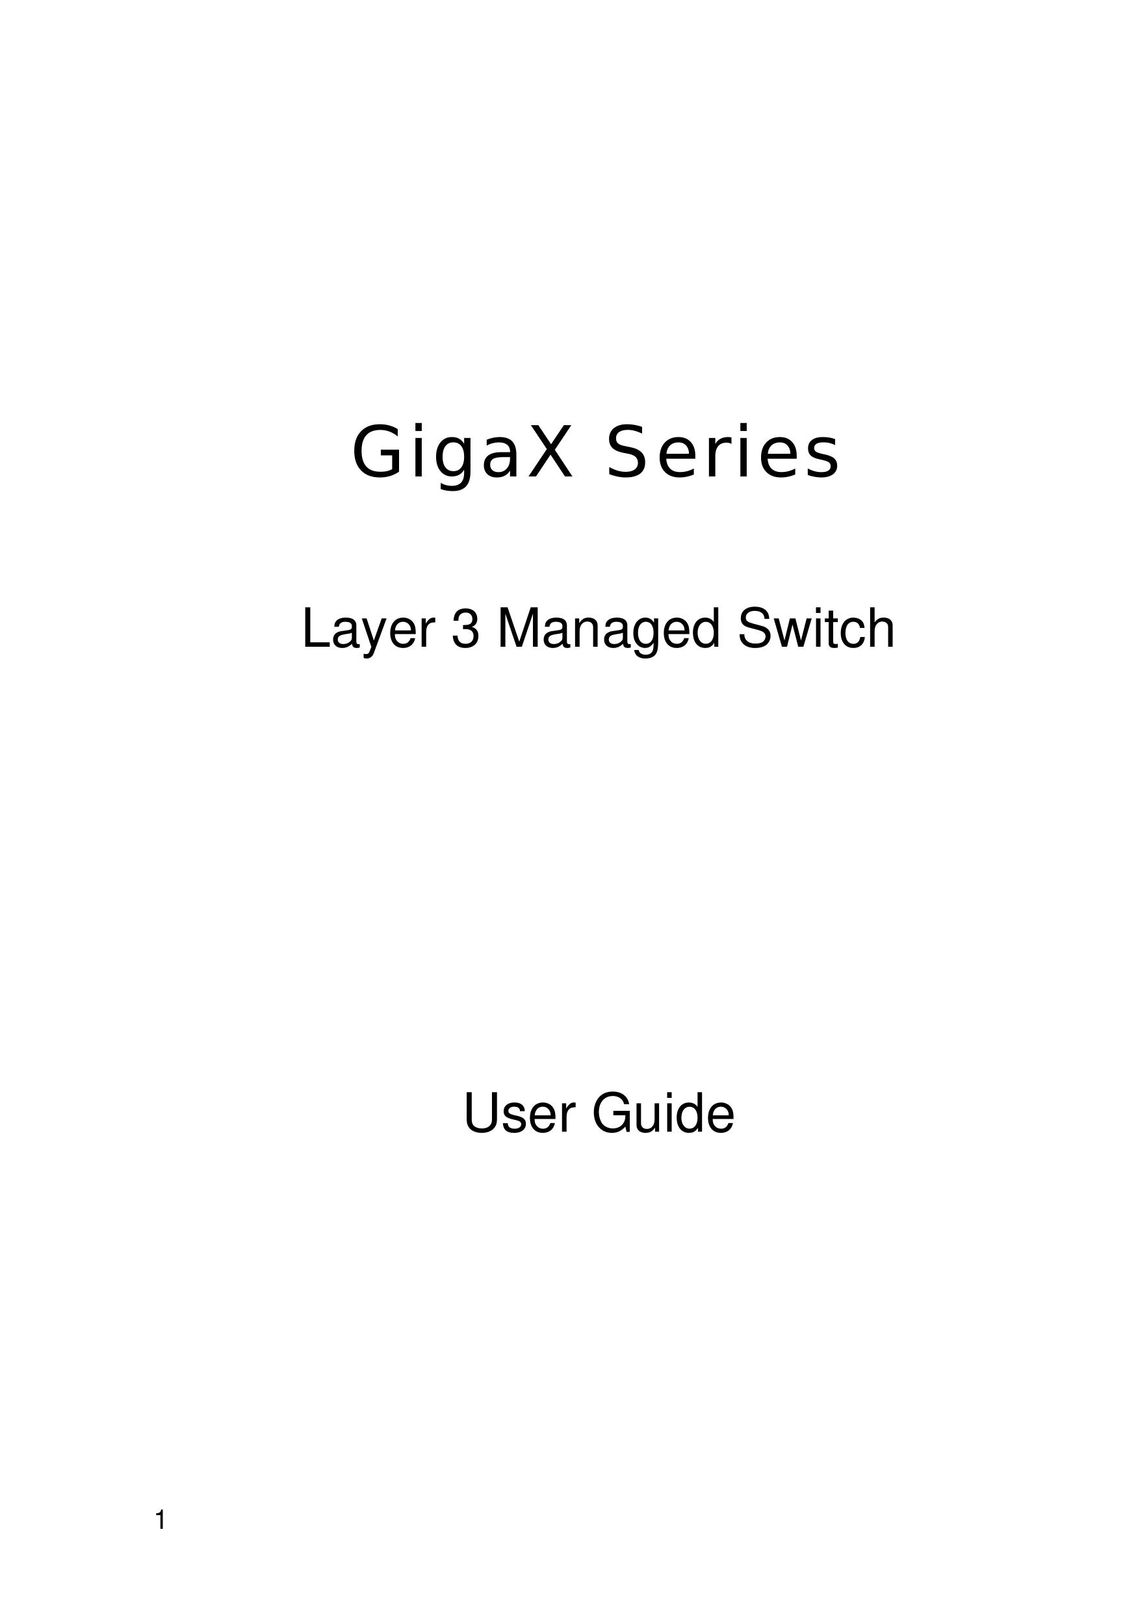 Asus GigaX Network Card User Manual